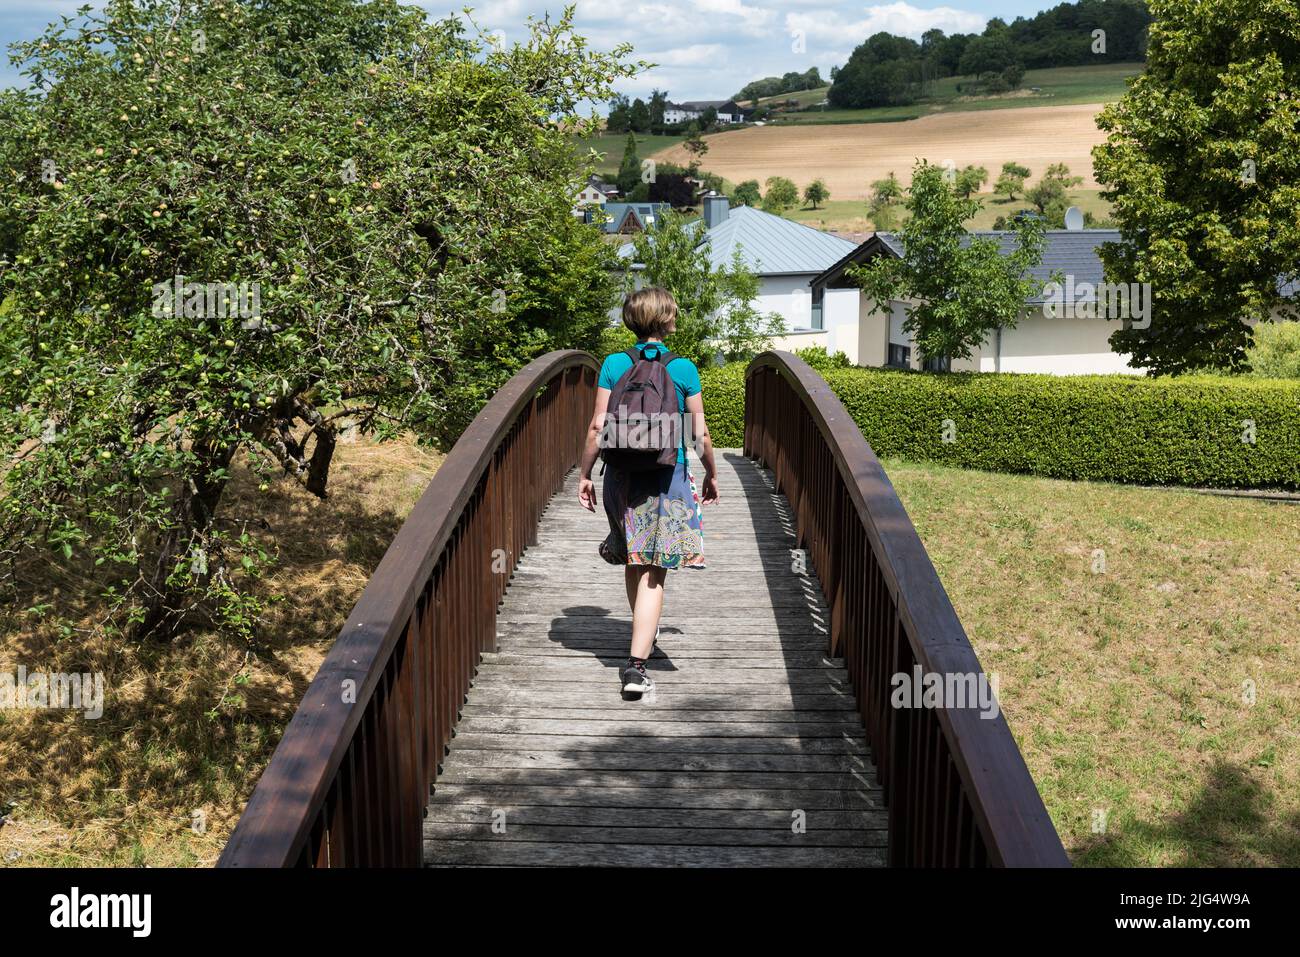 Welschbillig, Rhineland-Palatinate - Germany - 08 08 2020 Attractive girl walking over a wooden bridge Stock Photo